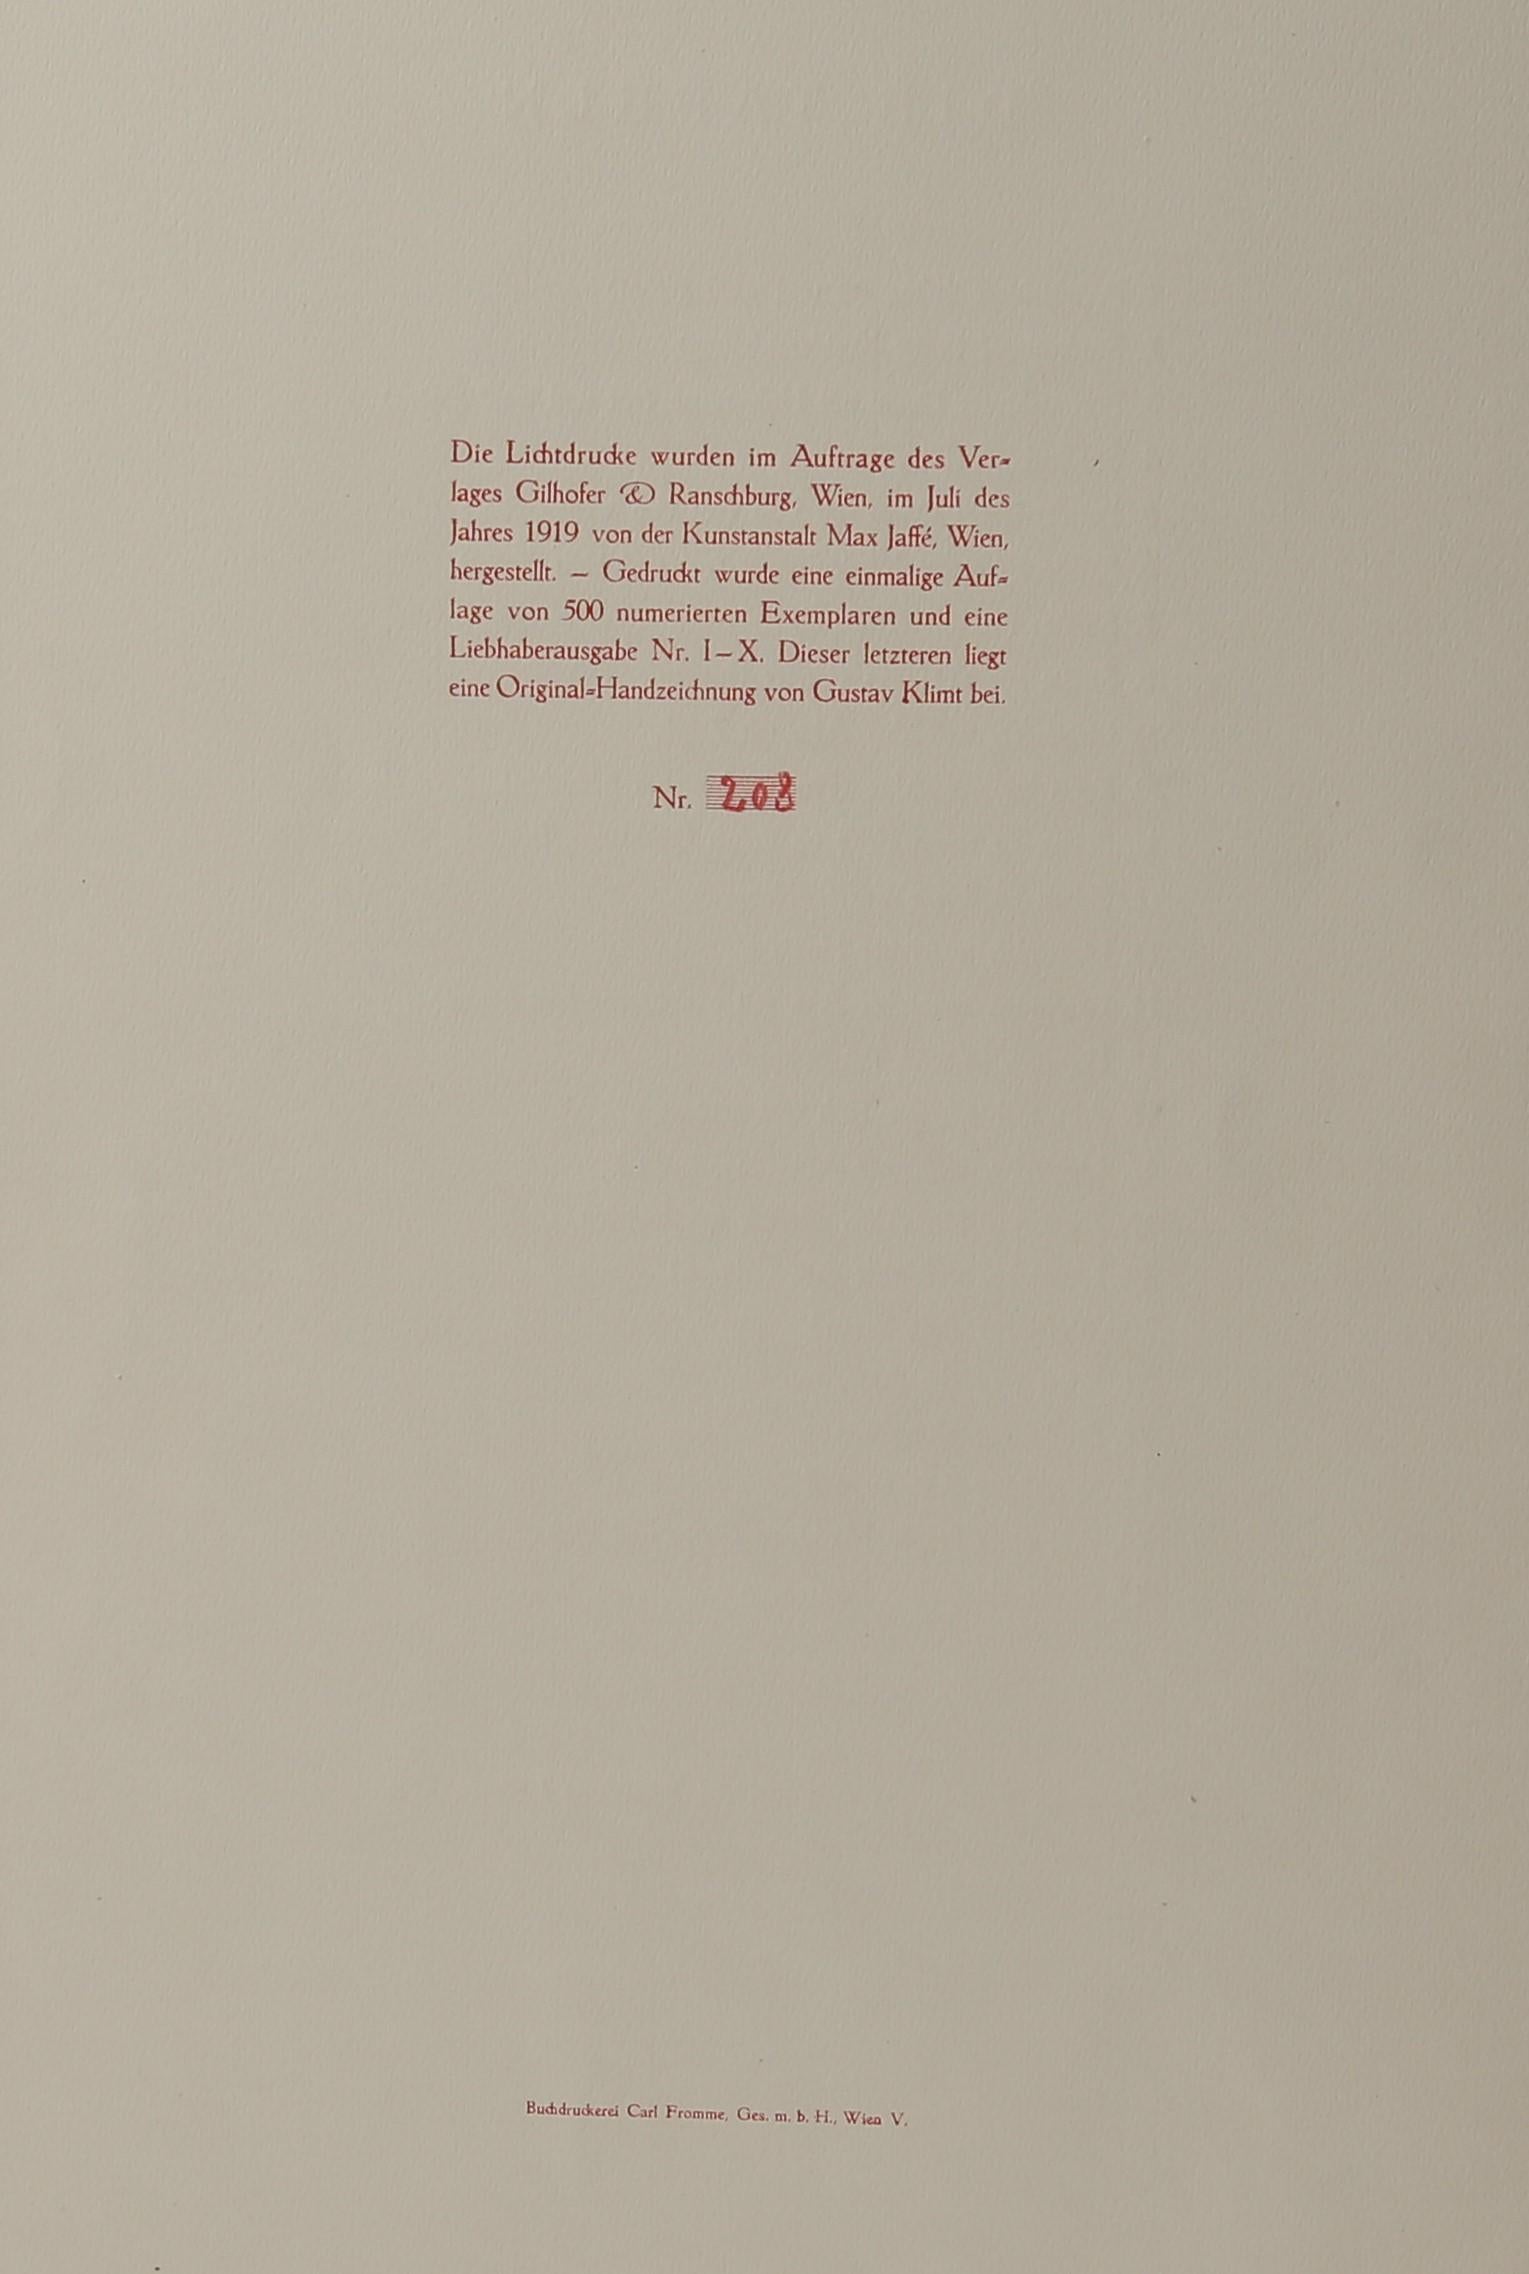 Two Women, Lying Down - From Fünfundzwanzig Handzeichnungen By Gustav Klimt, 1919.  Fünfundzwanzig Handzeichnungen contains twenty-five monochrome and two-color collotypes after drawings by Klimt. It is as remarkable an achievement in collotype